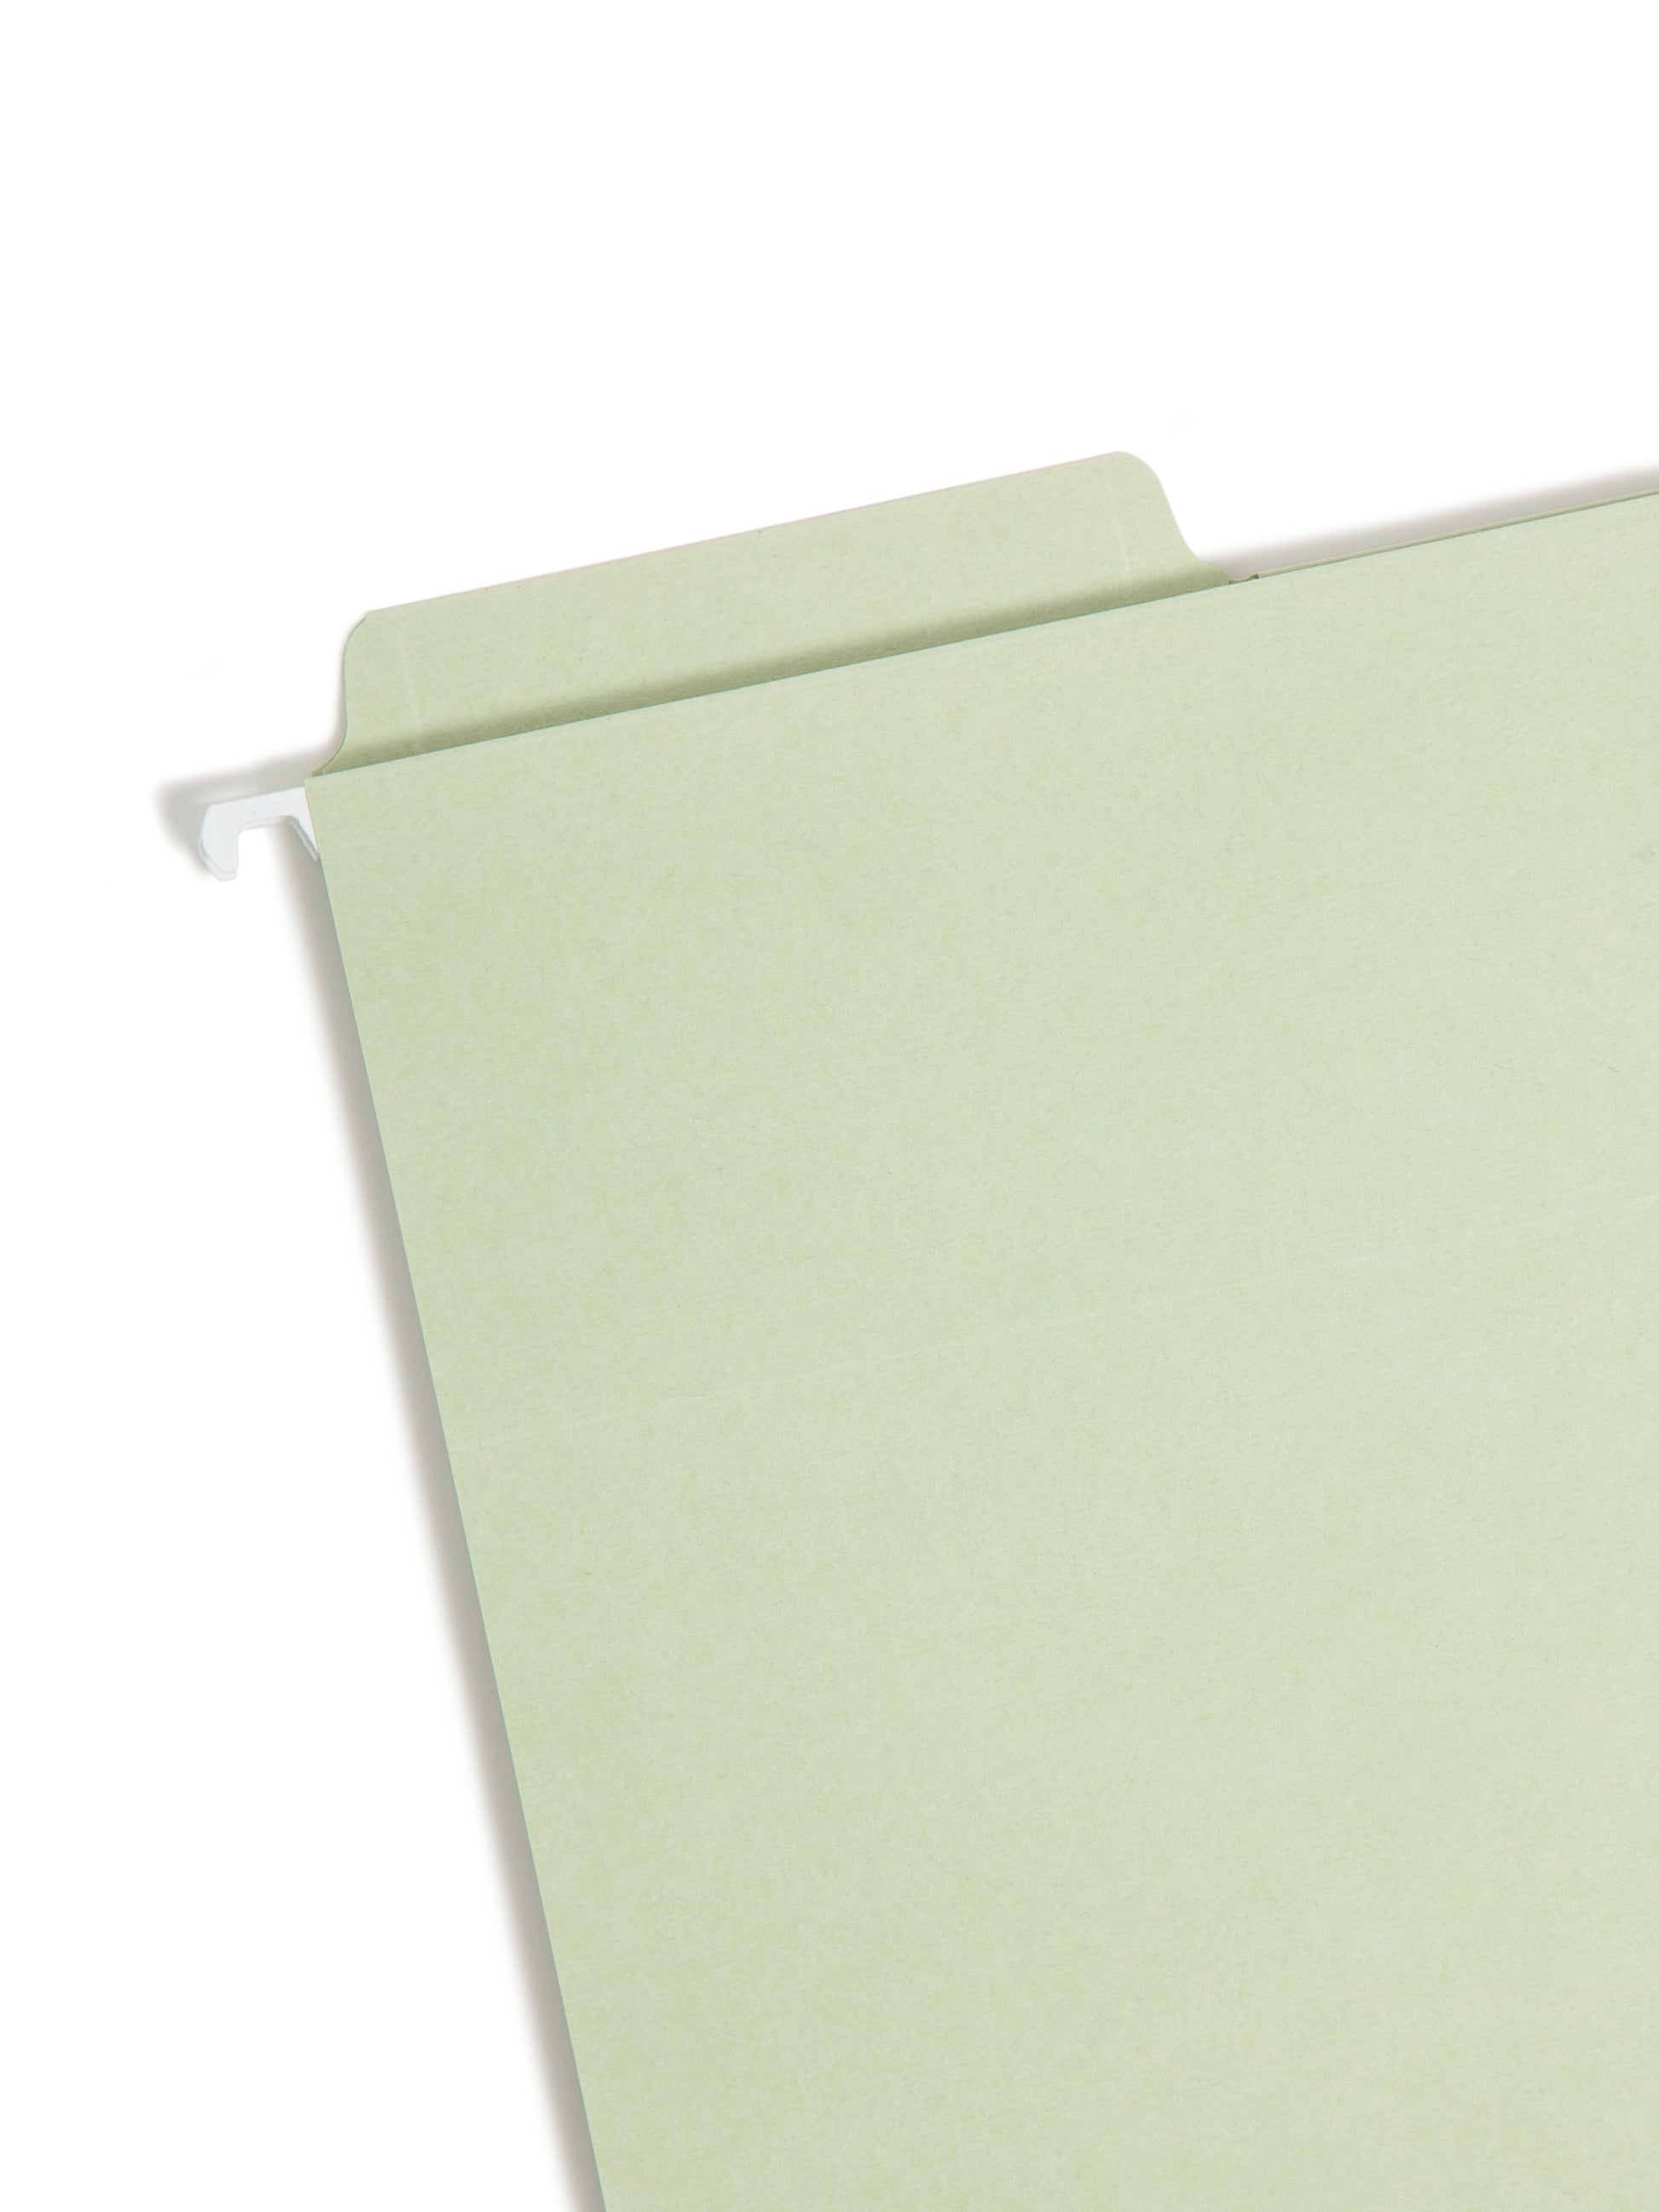 FasTab®/SafeSHIELD® Hanging File Fastener Folders, 1/3-Cut Tab, Moss Green Color, Letter Size, Set of 18, 086486651202